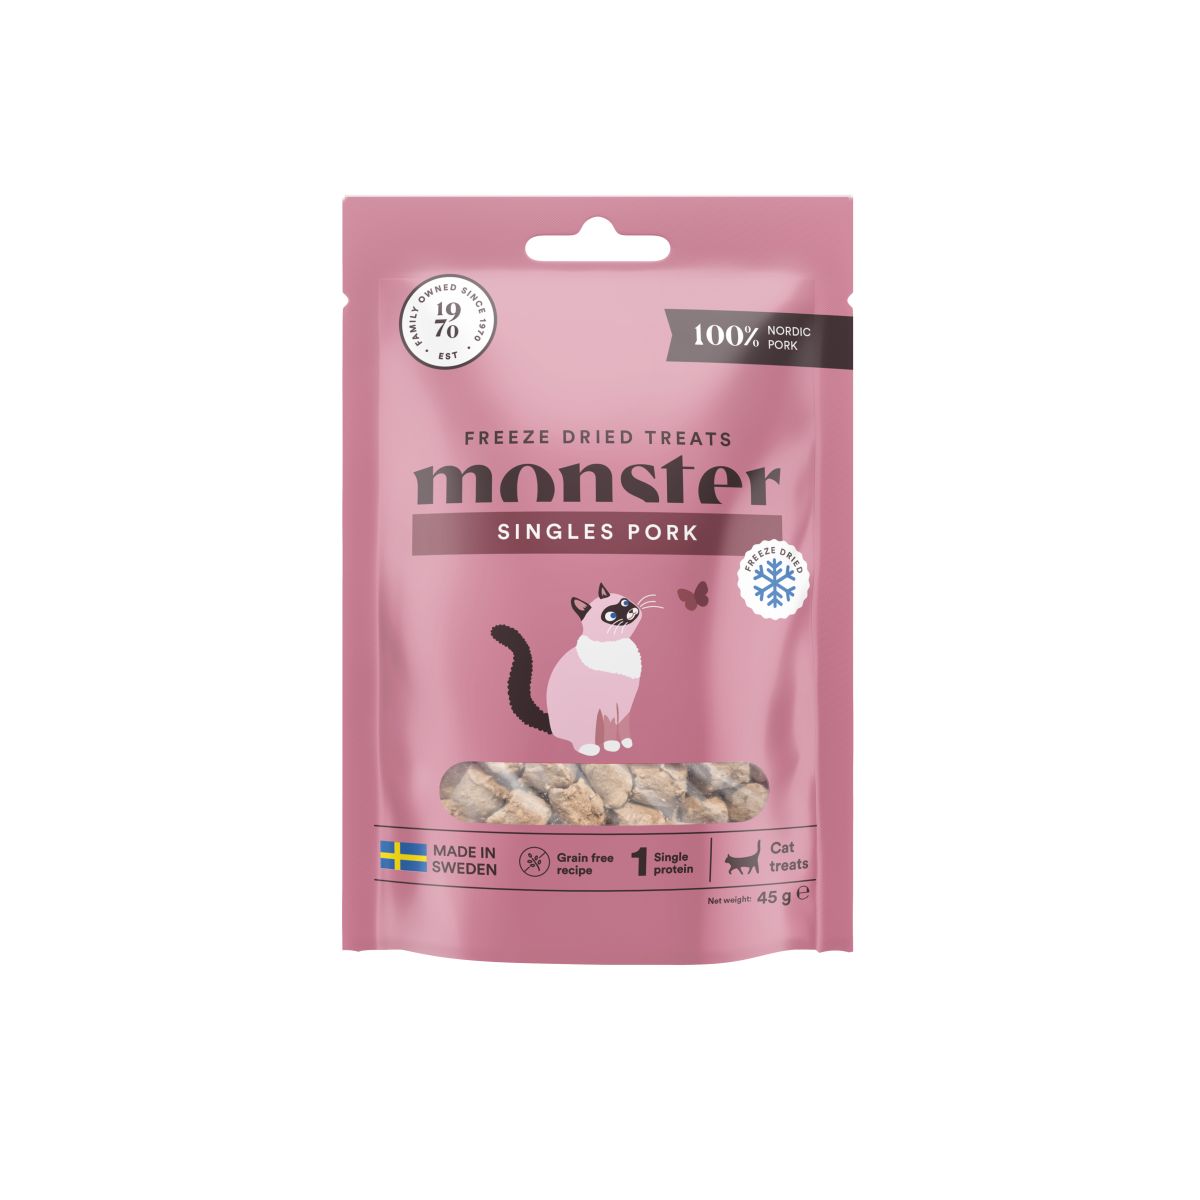 Monster Freeze dried treats Cat Singles Pork